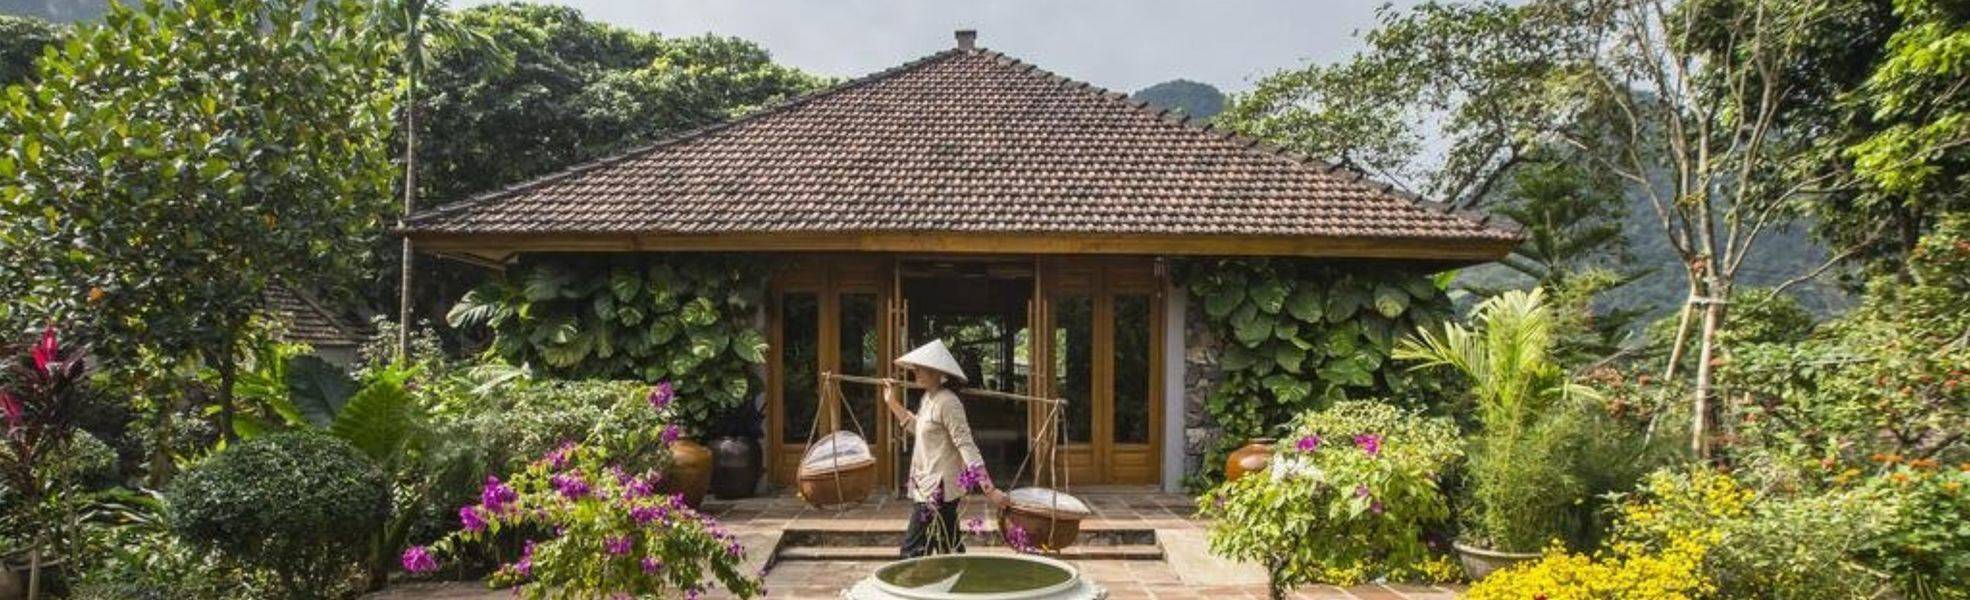 Volunteer in Vietnam with Rainbow Garden Village